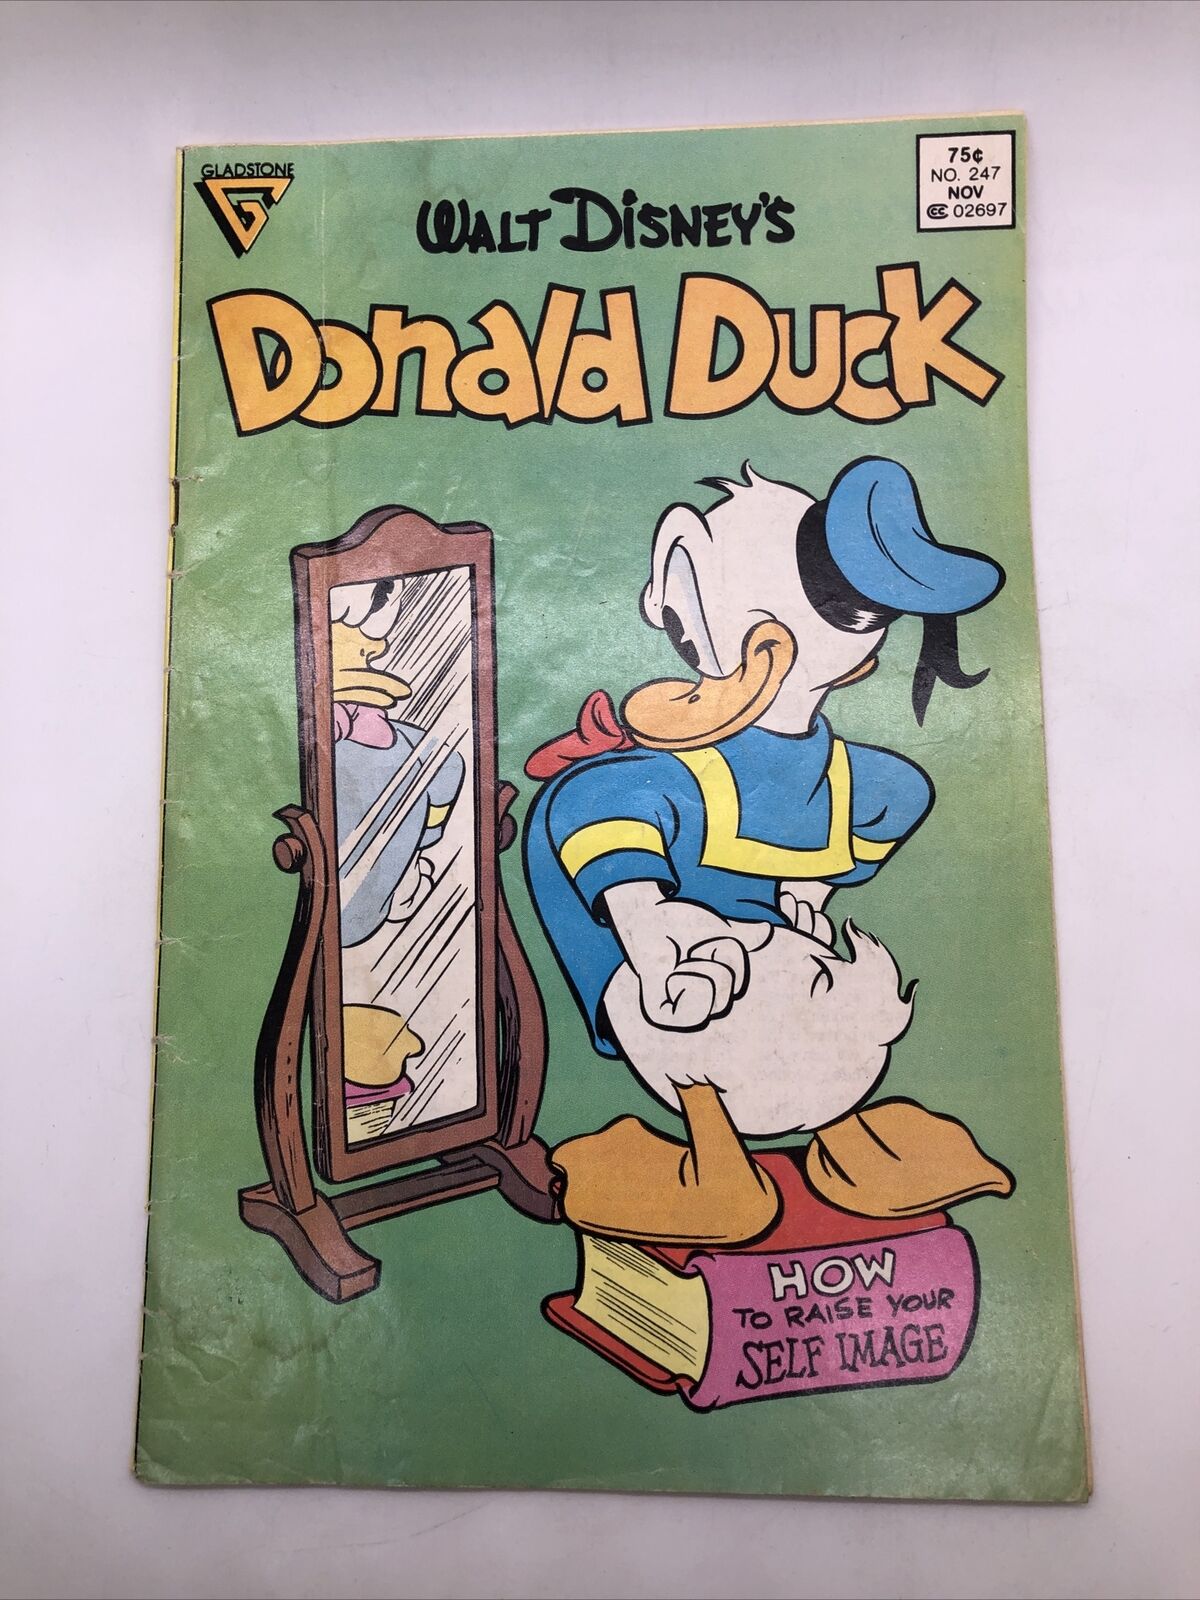 Walt Disney\'s Donald Duck Vol 1 No. 247 Nov 1986 Gladstone Publishing Comic Book